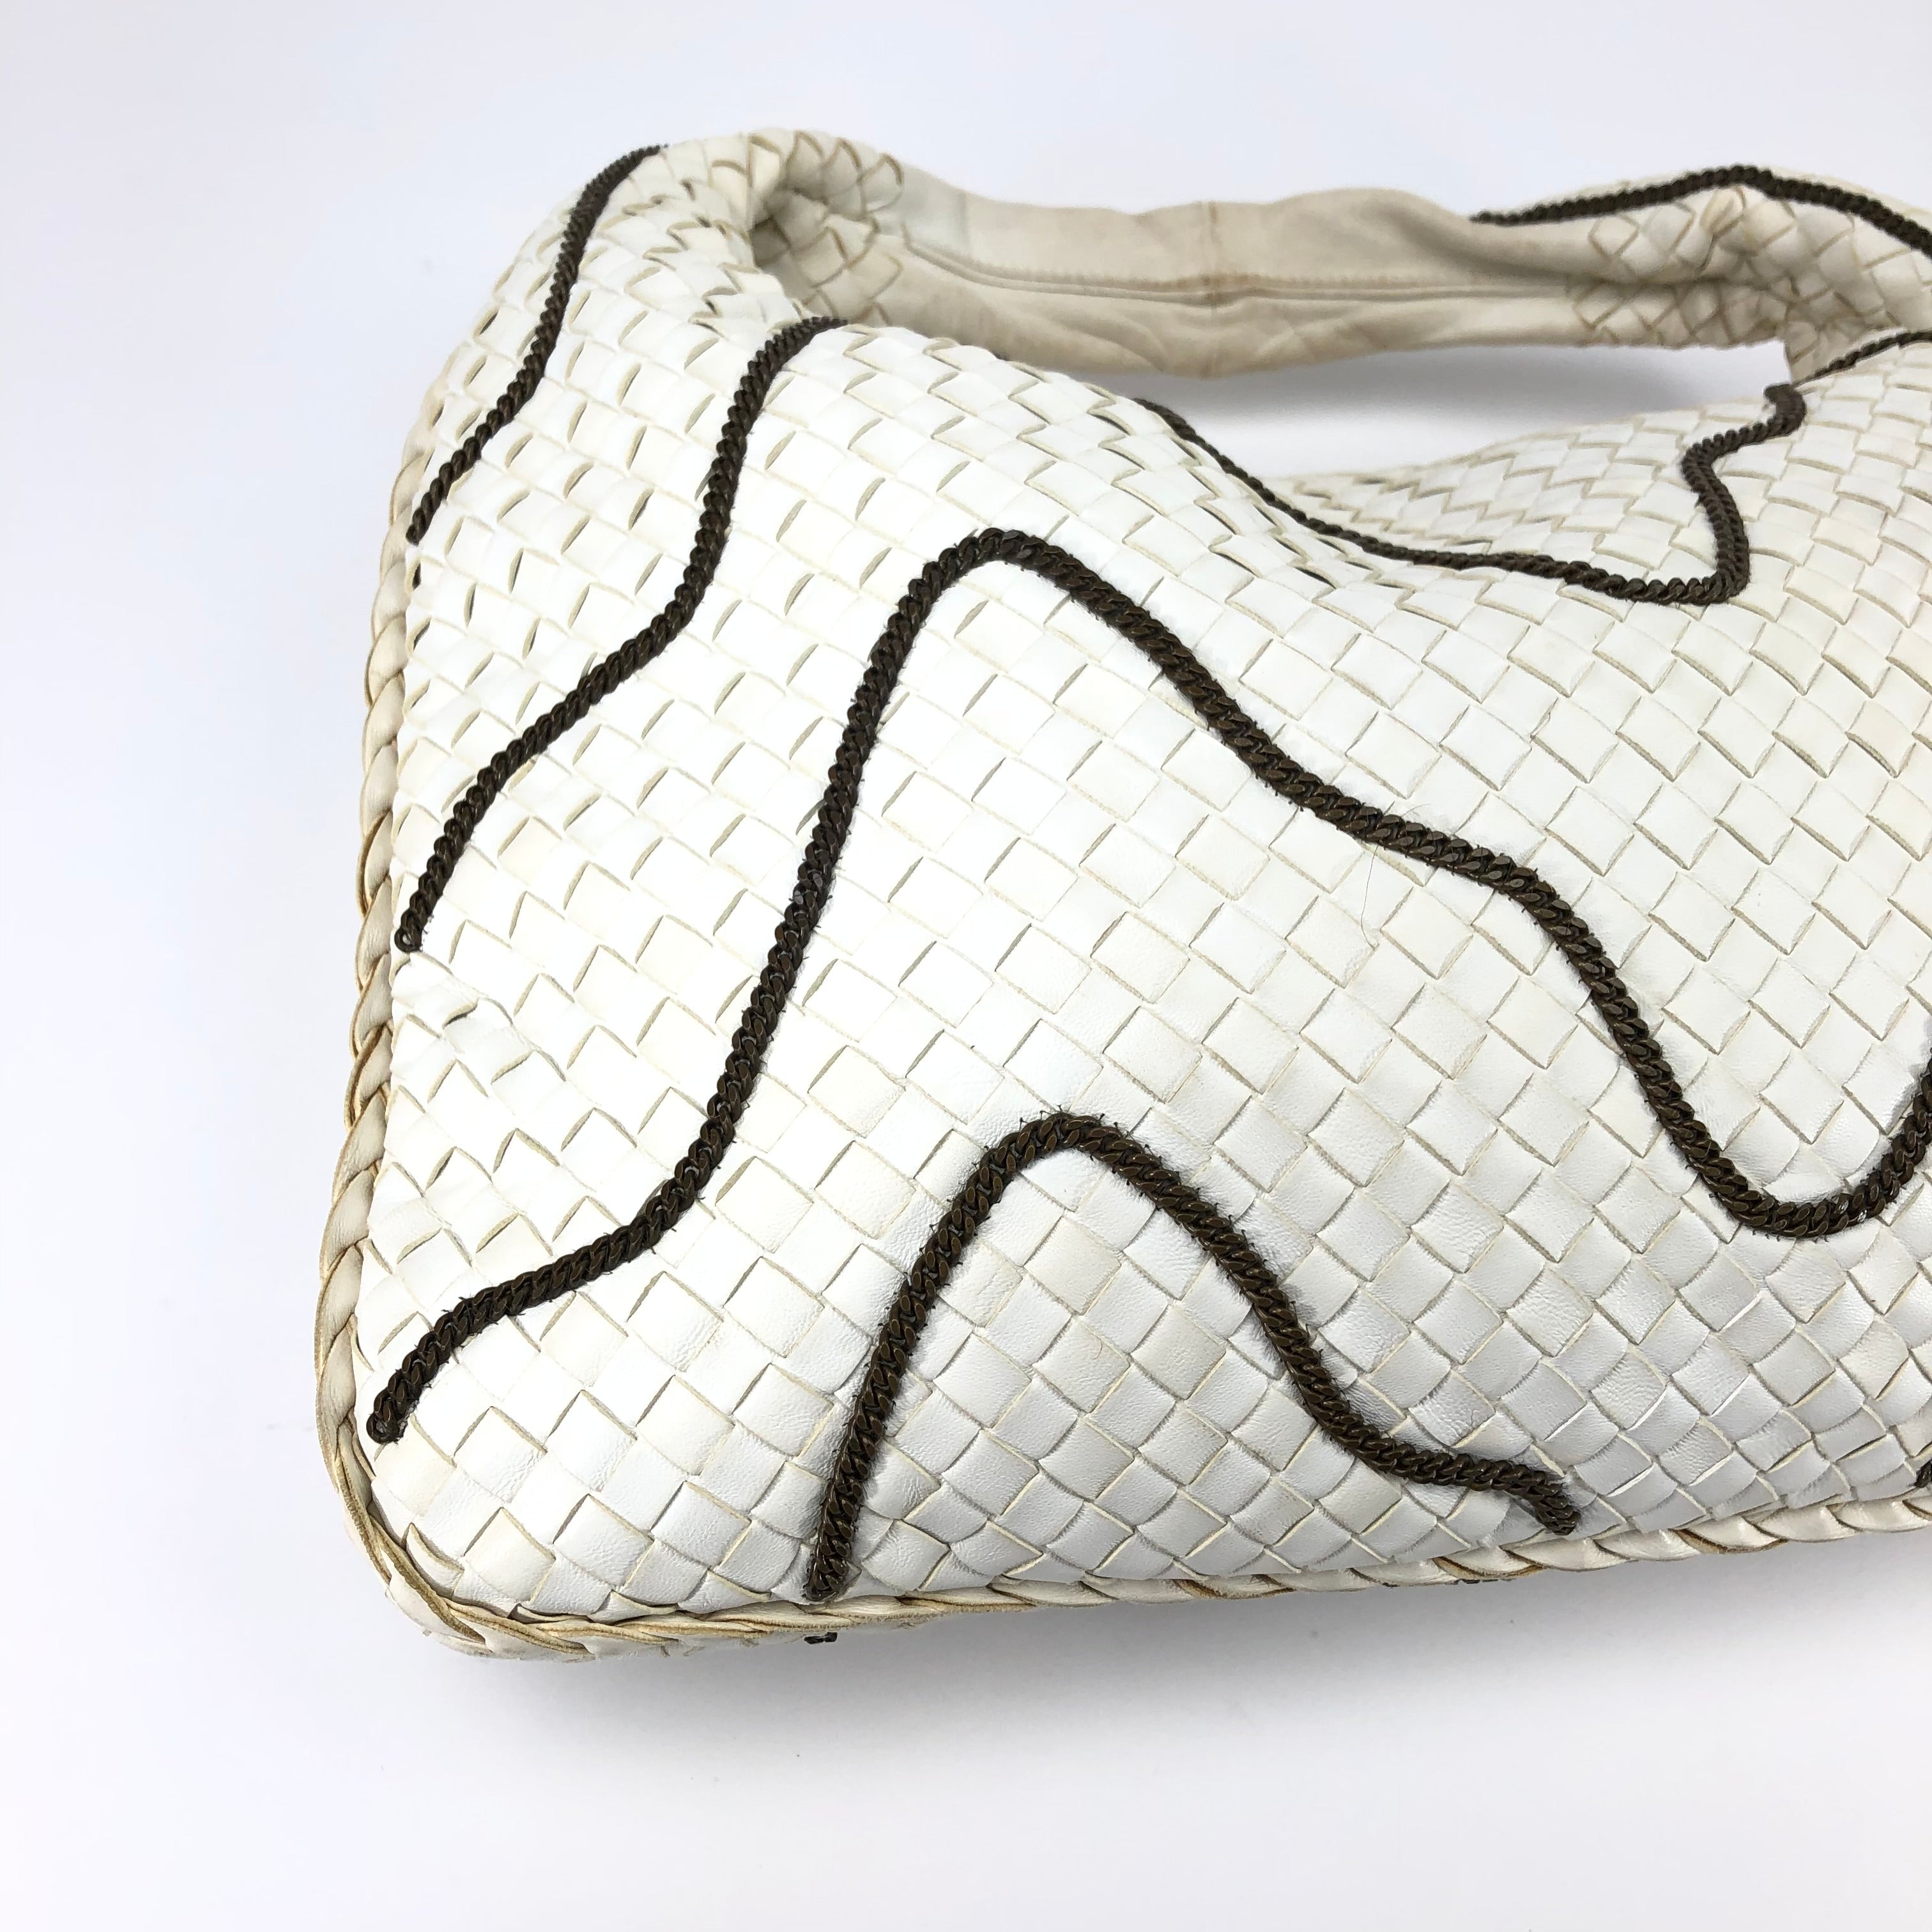 Bottega Veneta Intrecciato Hobo Bag with Chain Detailing